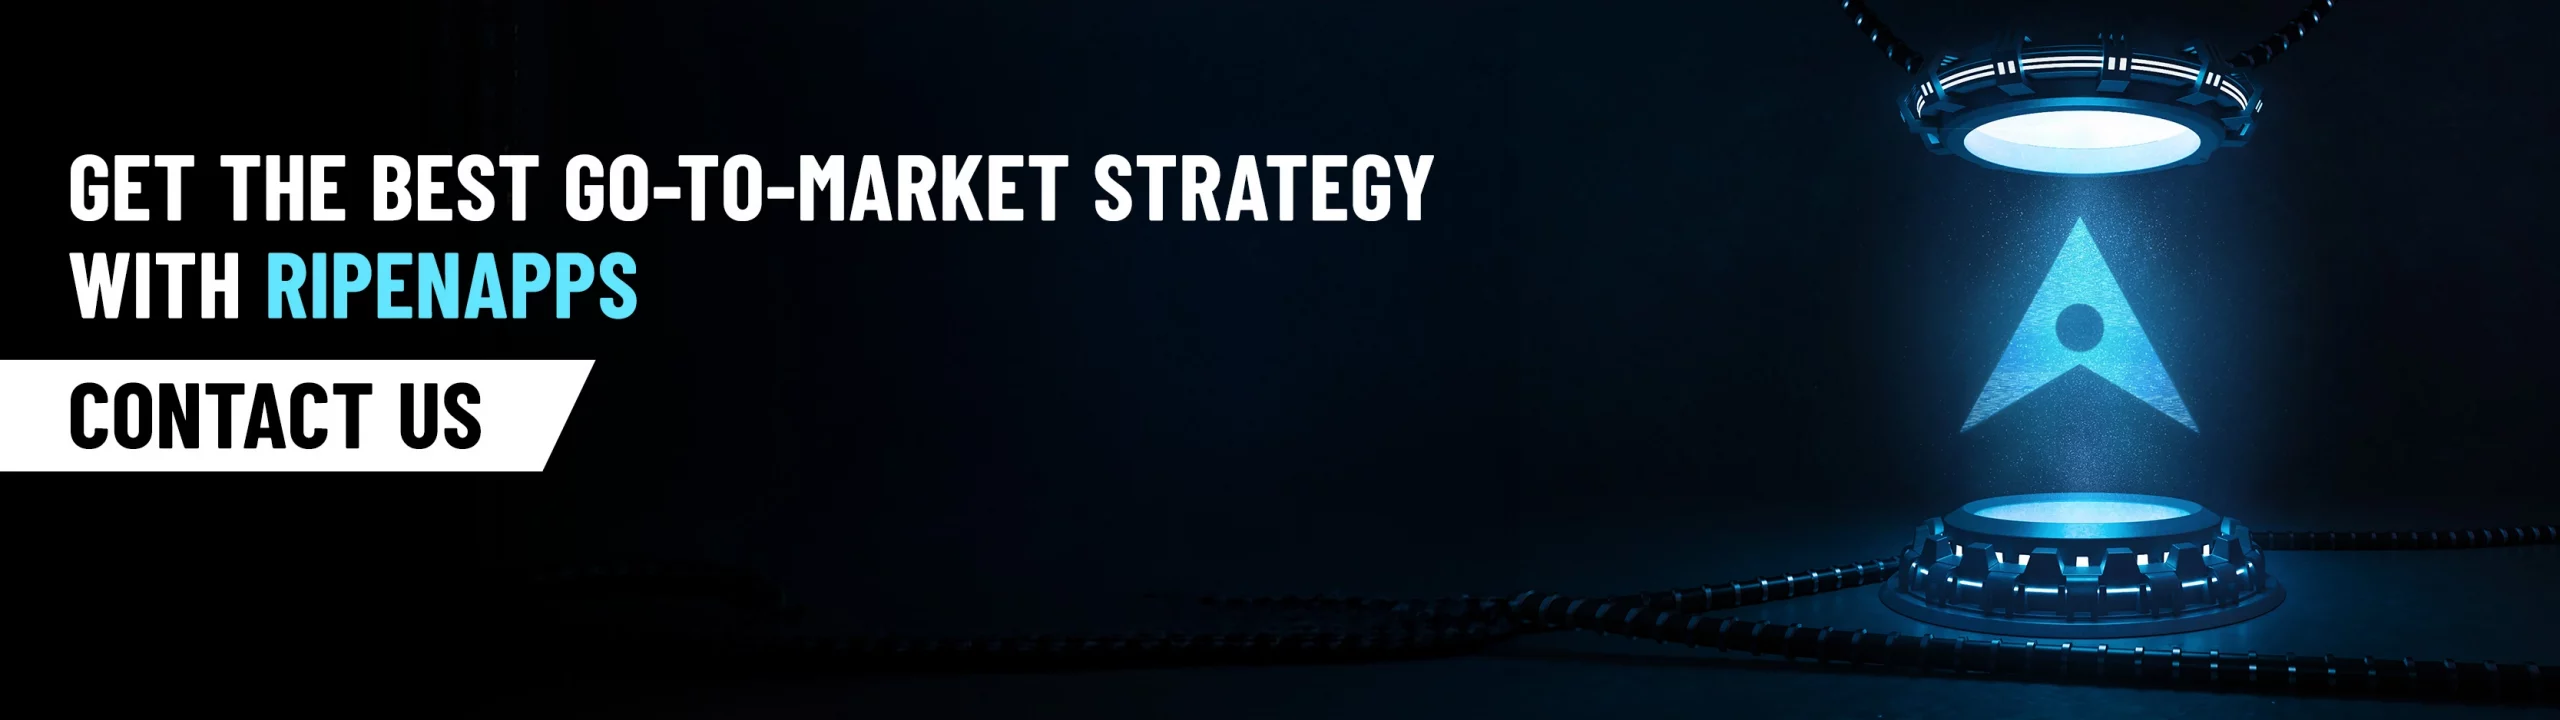 Go-to-Market-Strategy-Contact-Us-CTA